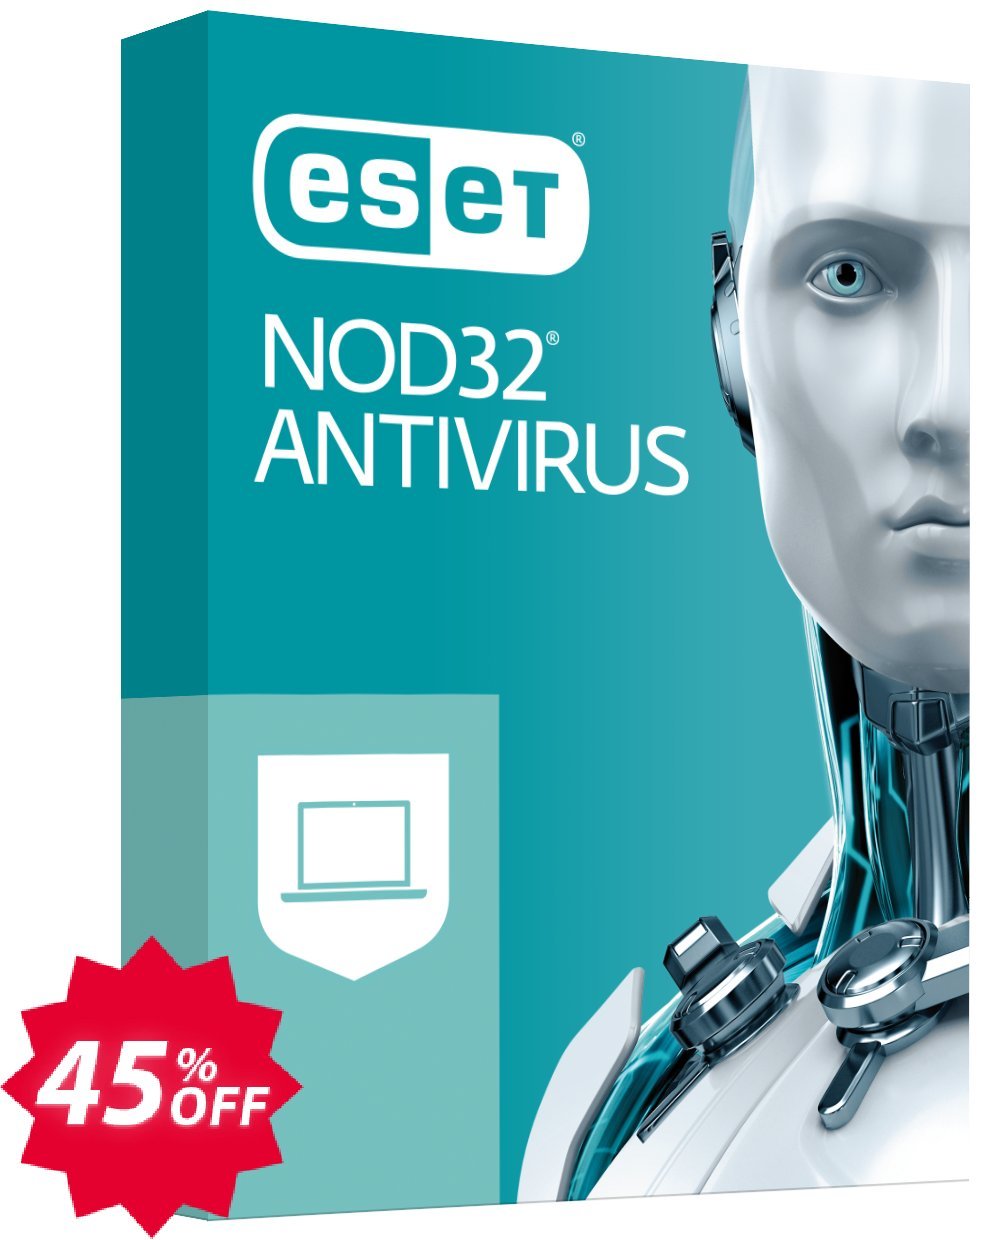 ESET NOD32 Antivirus - Renew 3 Years 5 Devices Coupon code 45% discount 